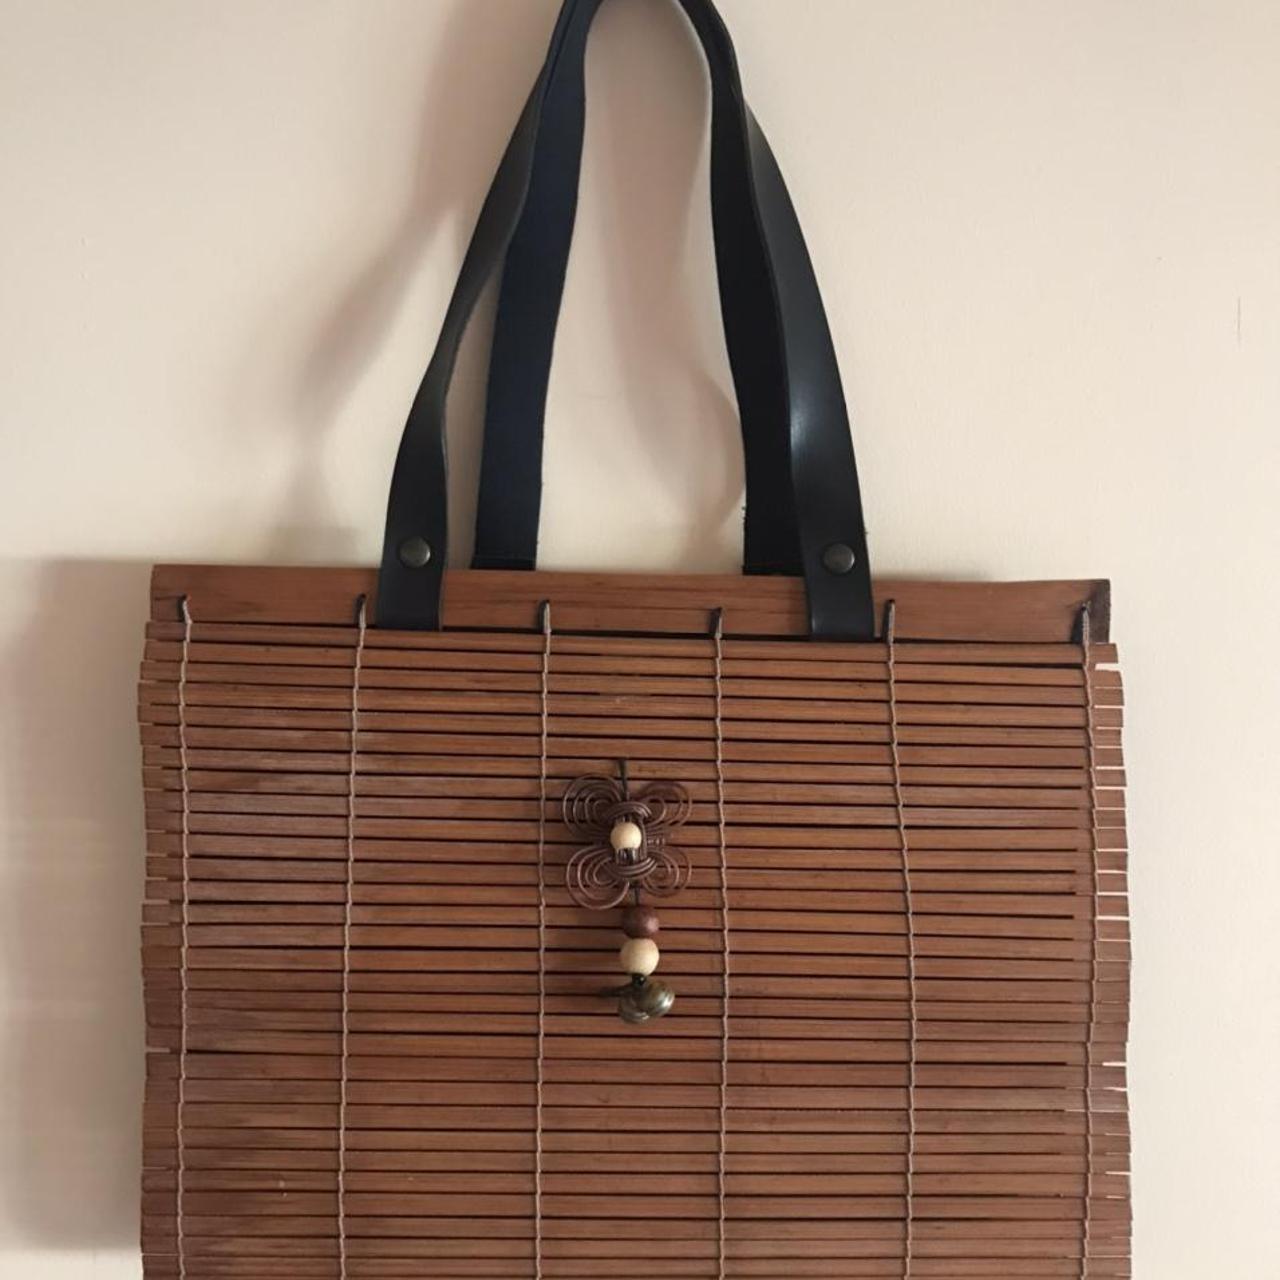 Product Image 2 - Wicker vintage brown Handbag with